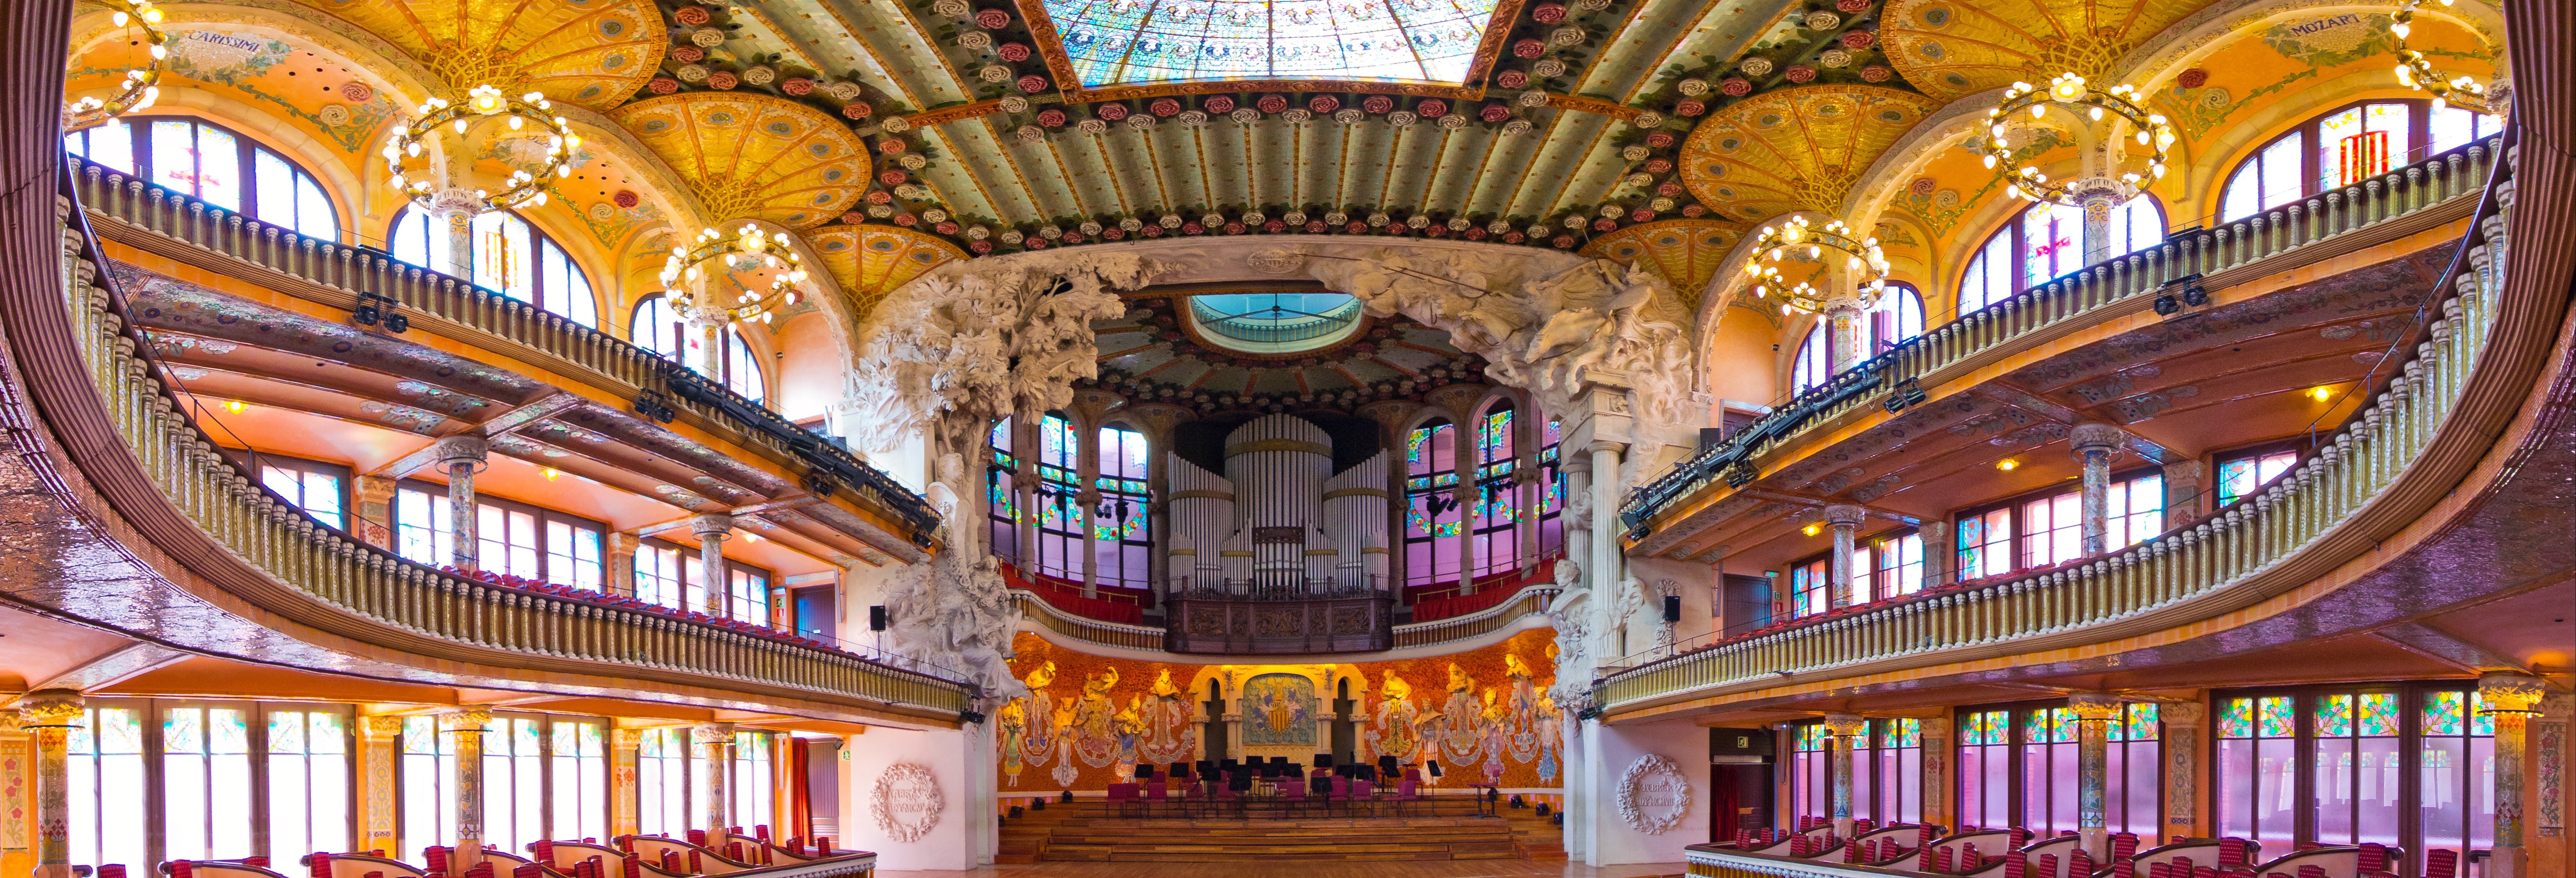 Visita guiada pelo Palau de la Música Catalana